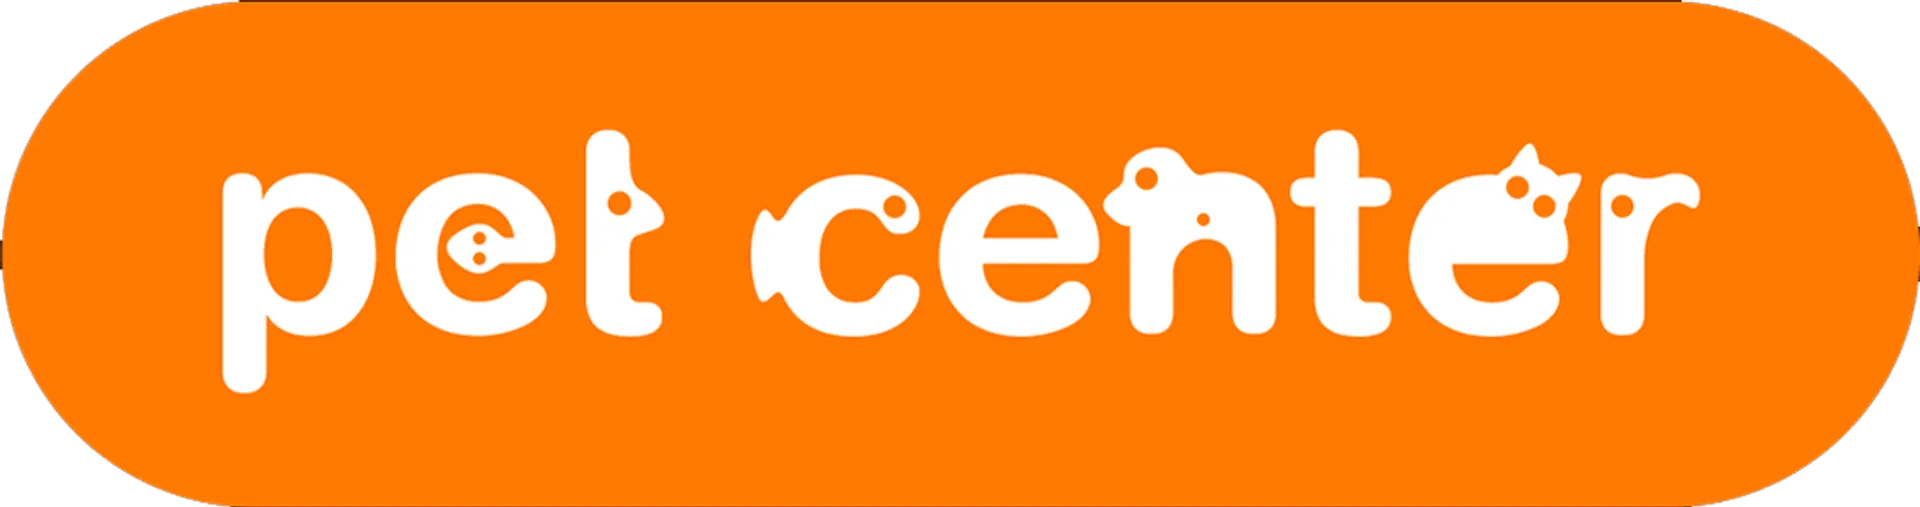 PET CENTER logo